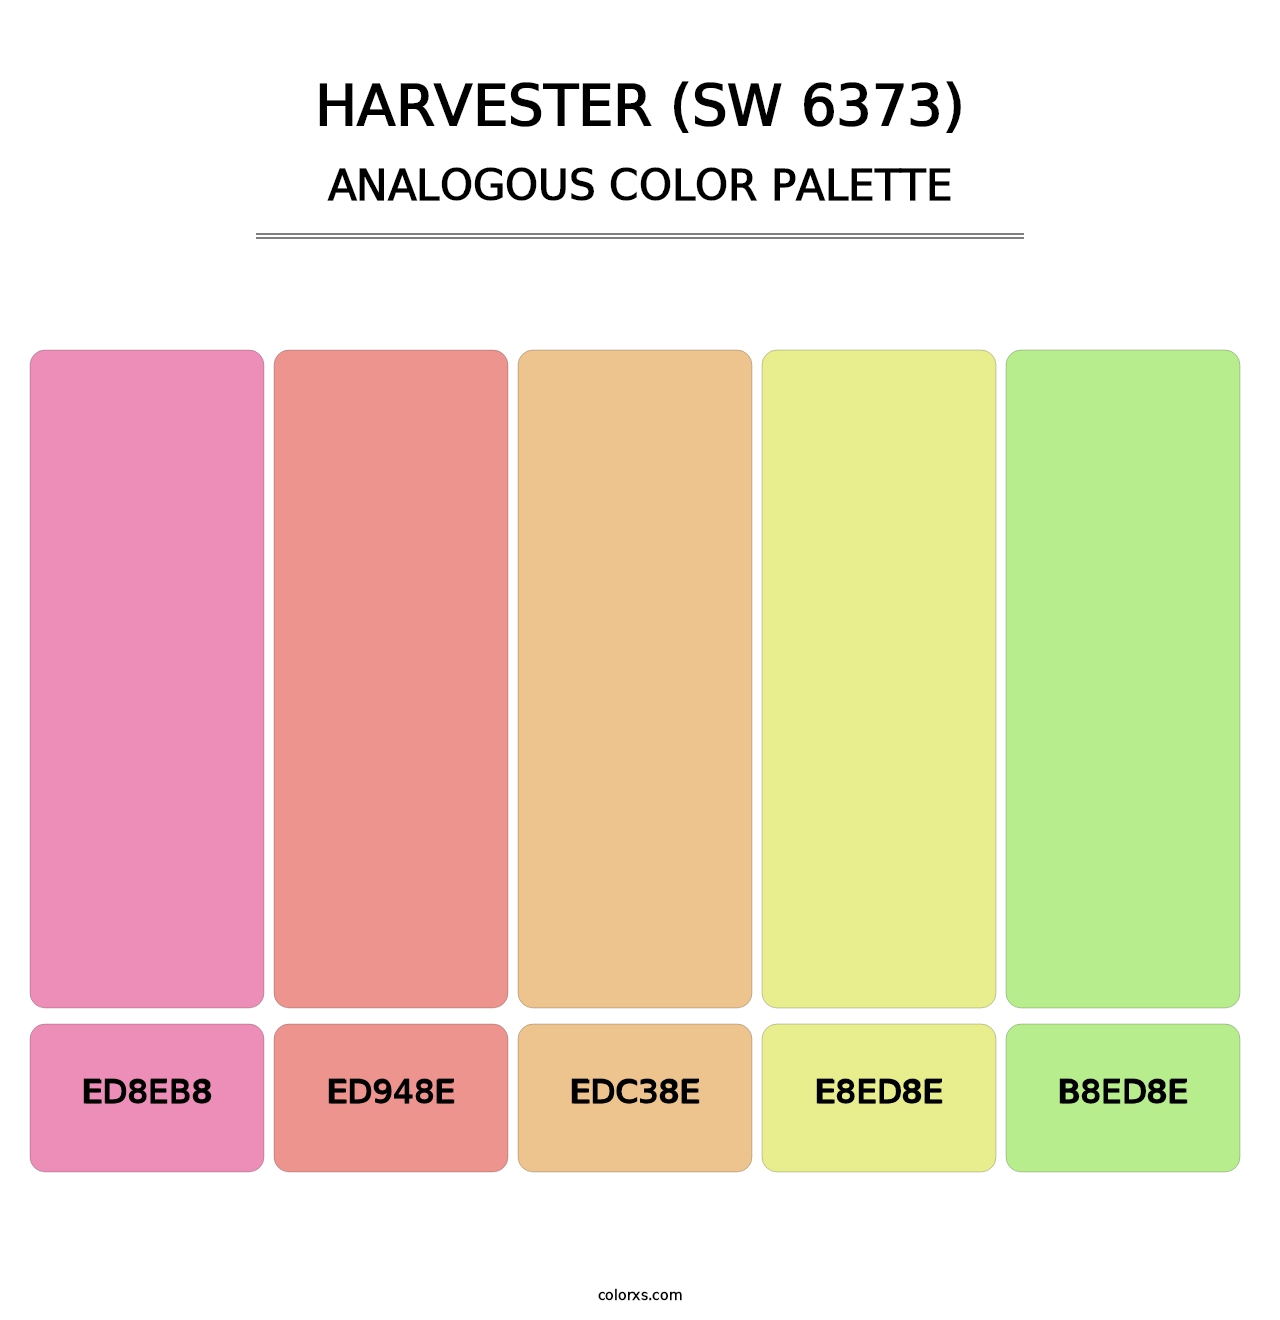 Harvester (SW 6373) - Analogous Color Palette